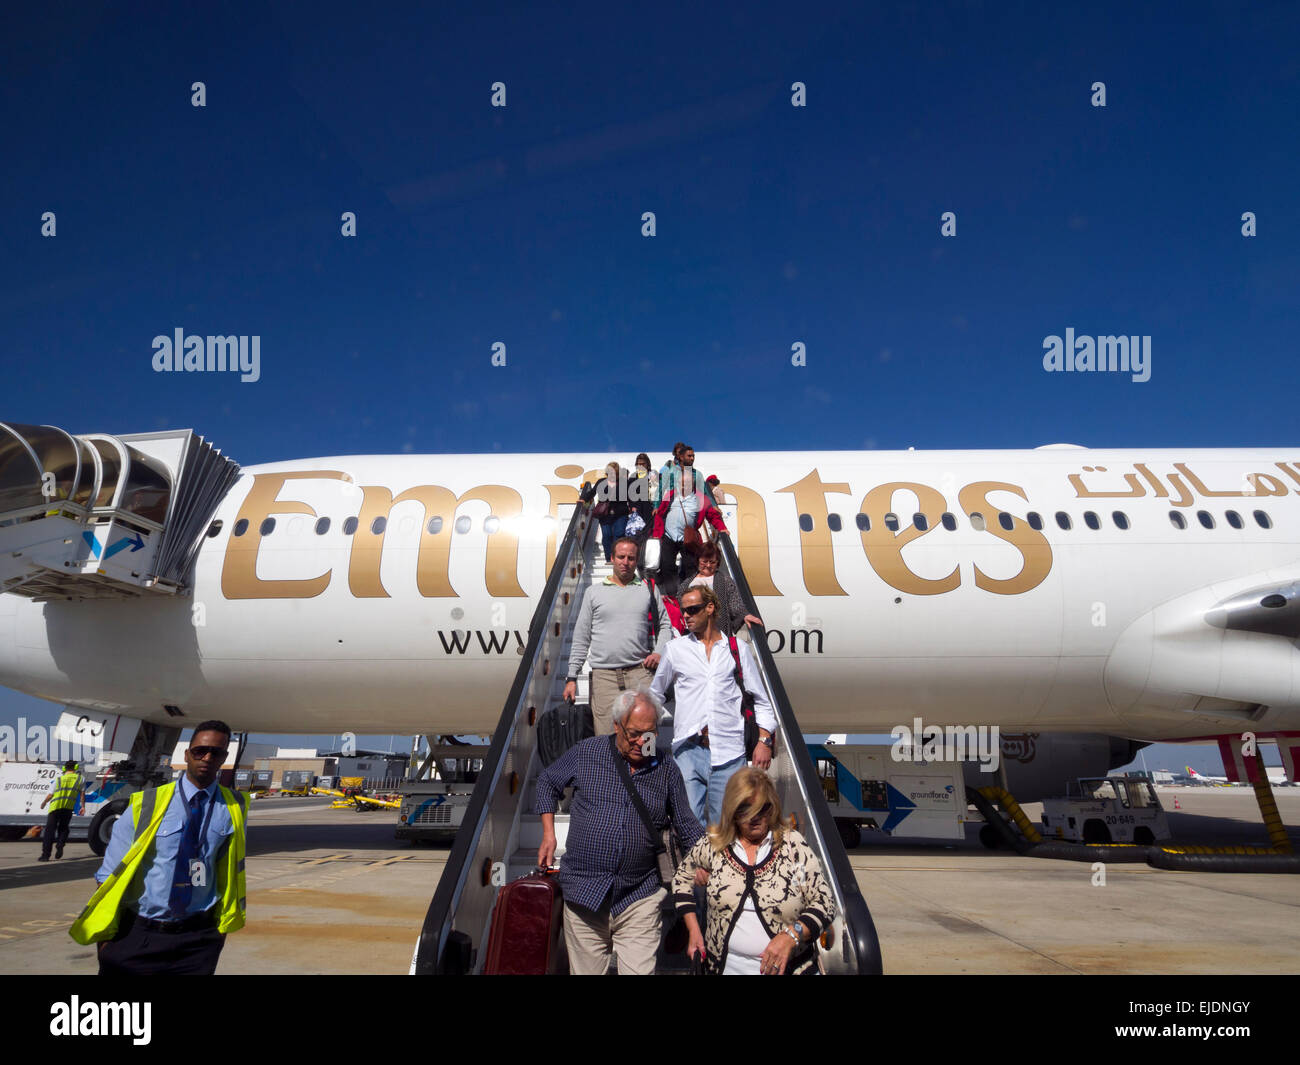 Passengers disembarking an Emirates airplane Stock Photo